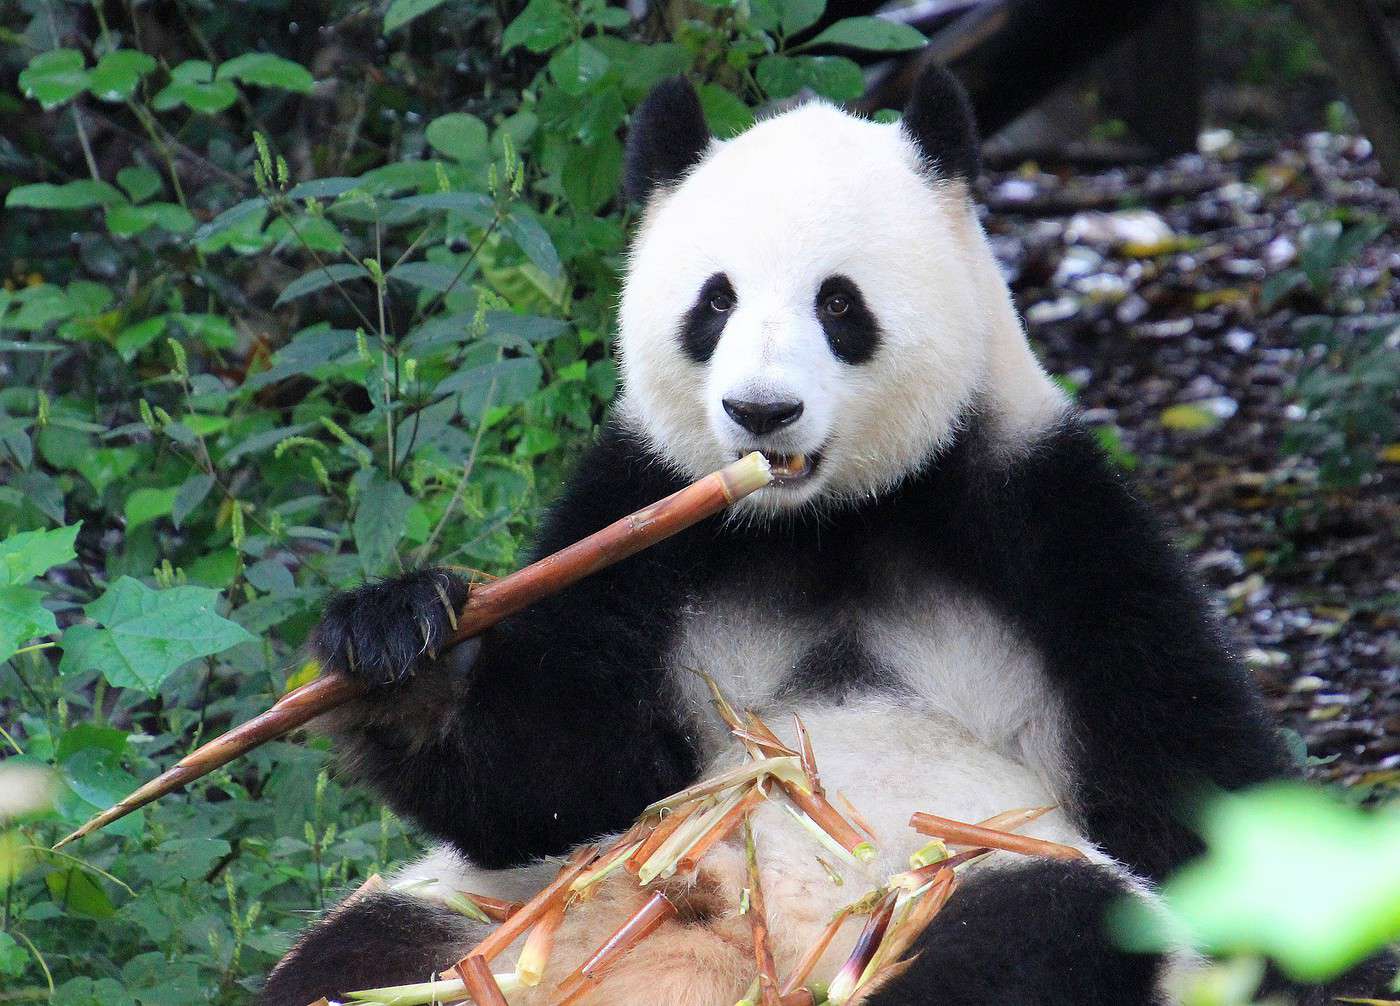 Couverts de voyage en bambou - My little panda